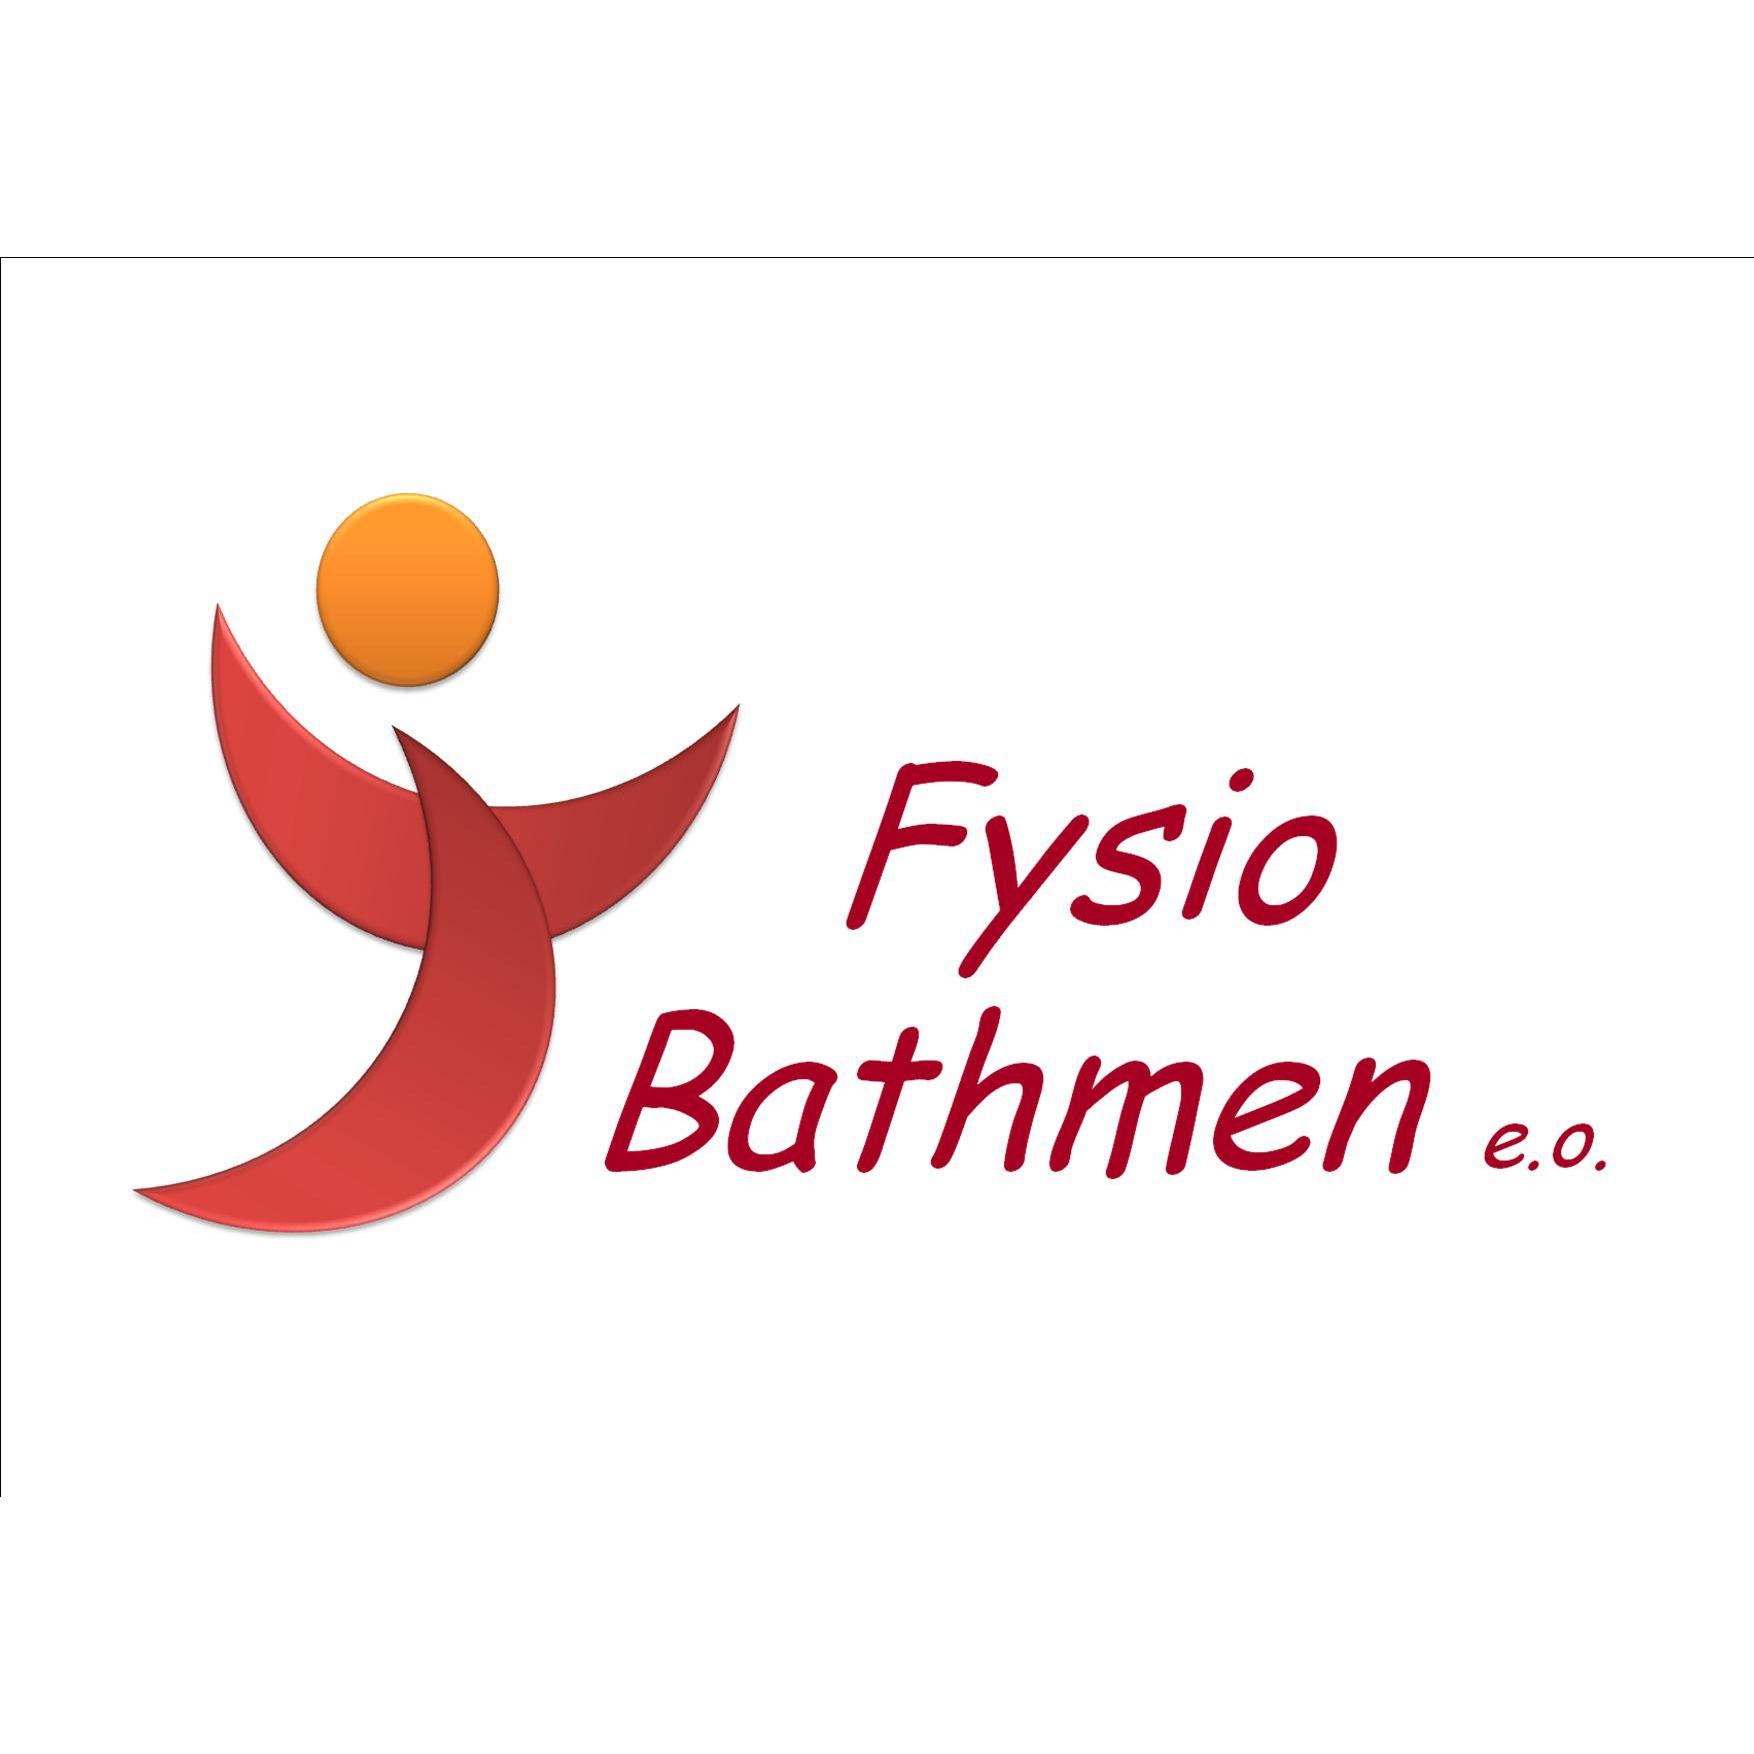 Fysiotherapie Bathmen Logo